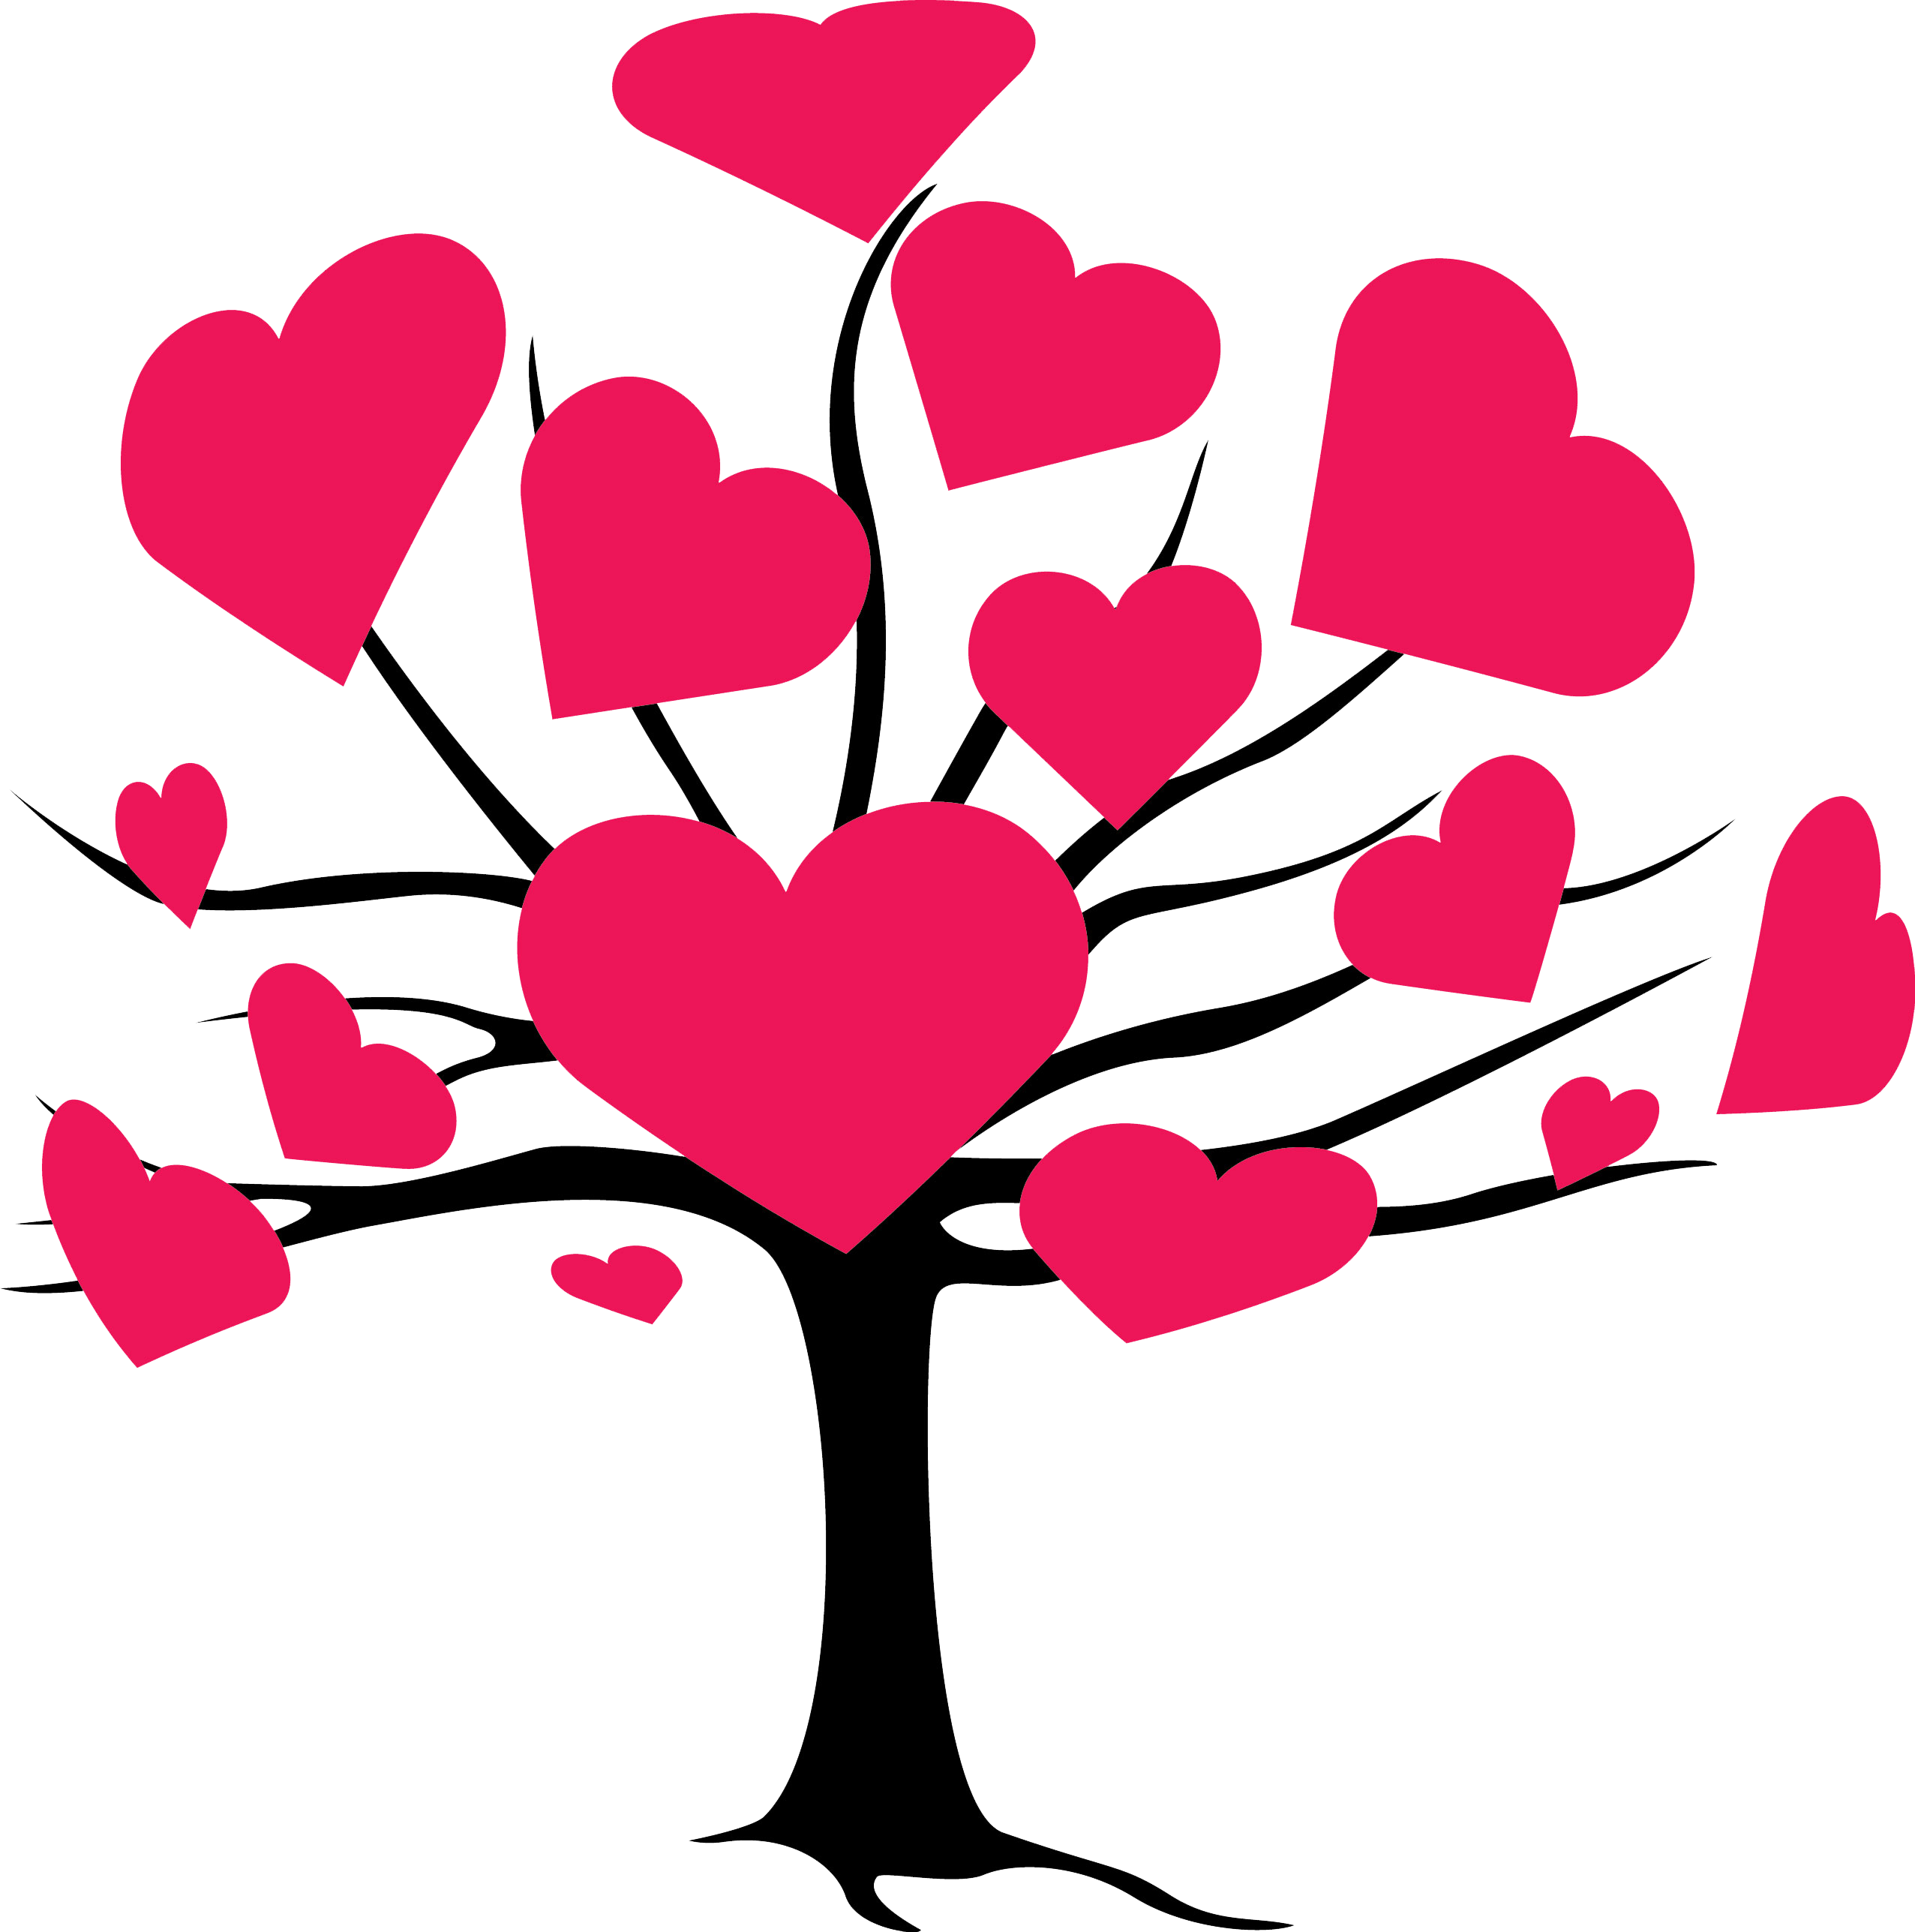 Красное сердце дерева PNG Image